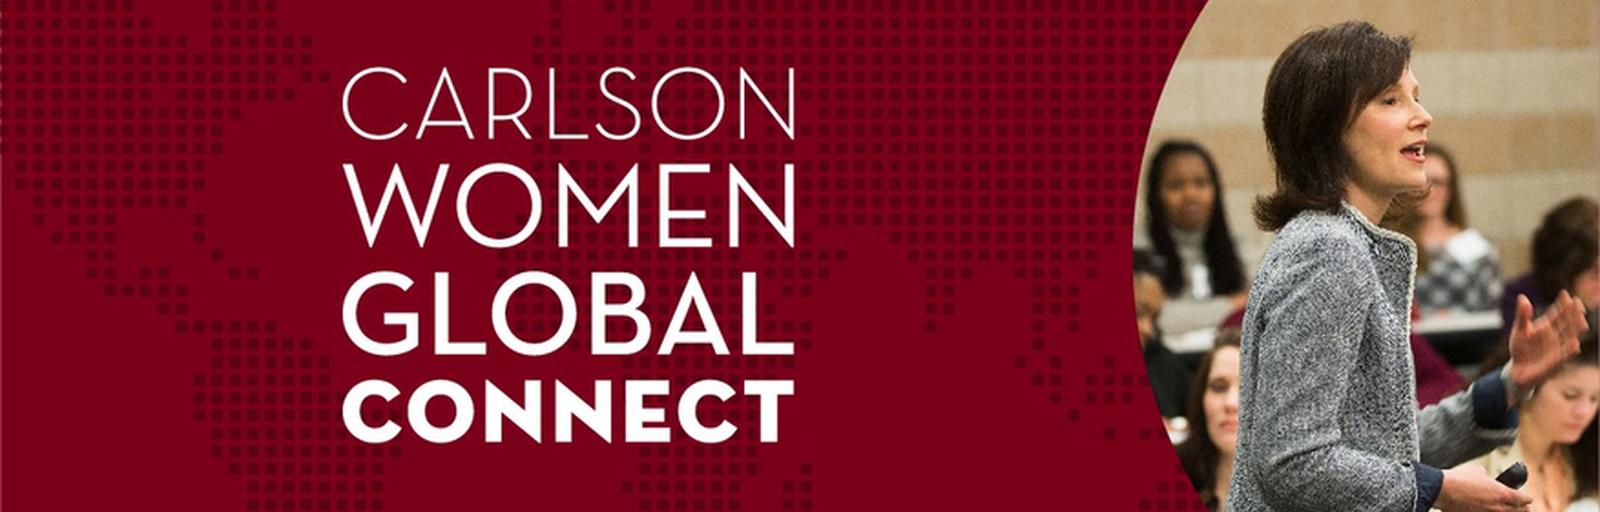 Carlson Women Global Connect